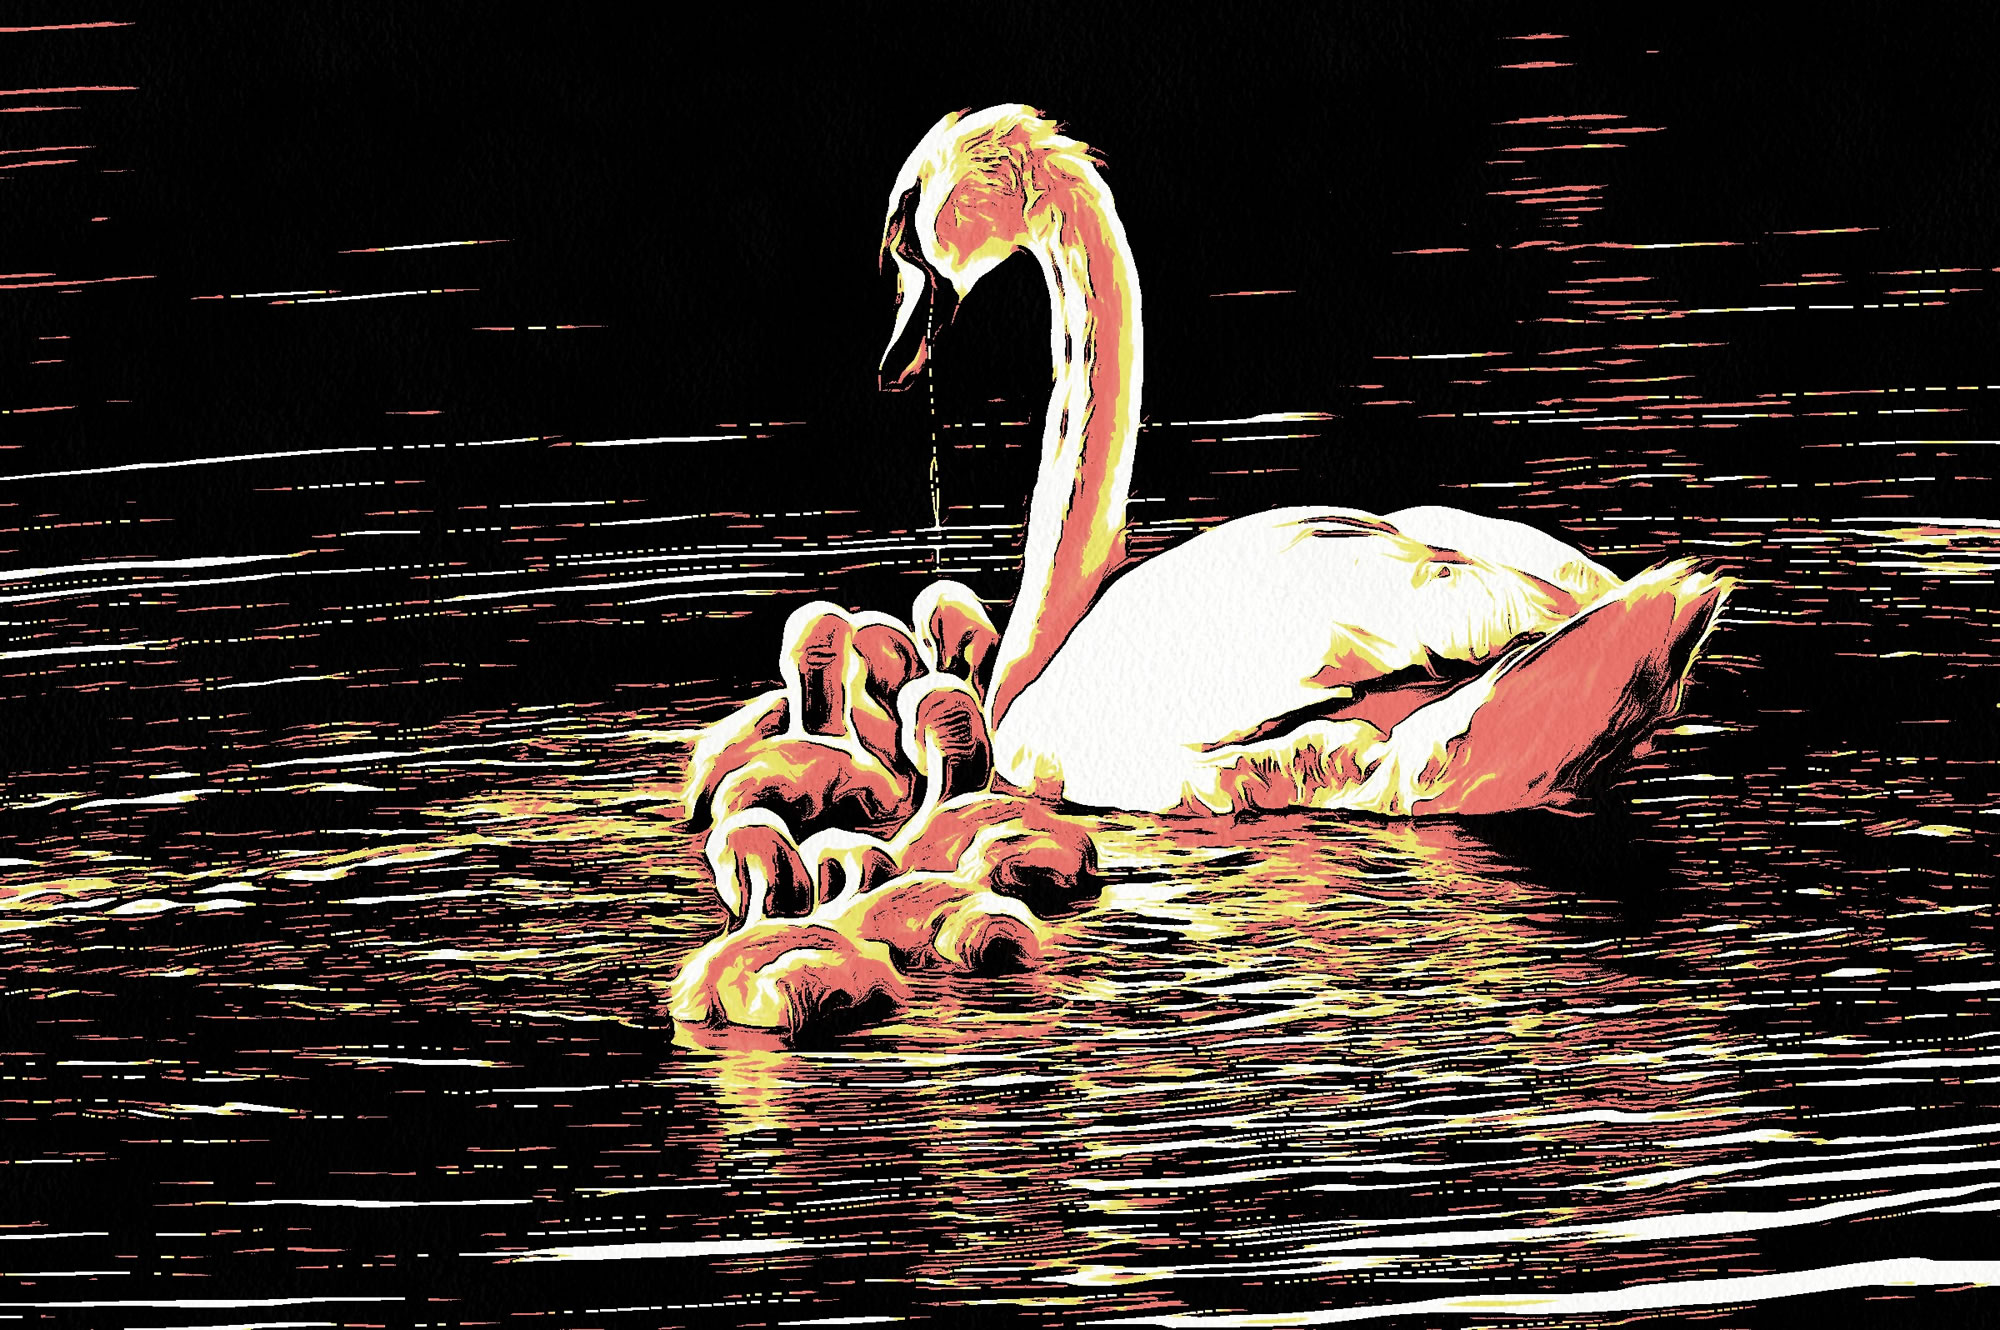 Swan art picture 63 - art image 4